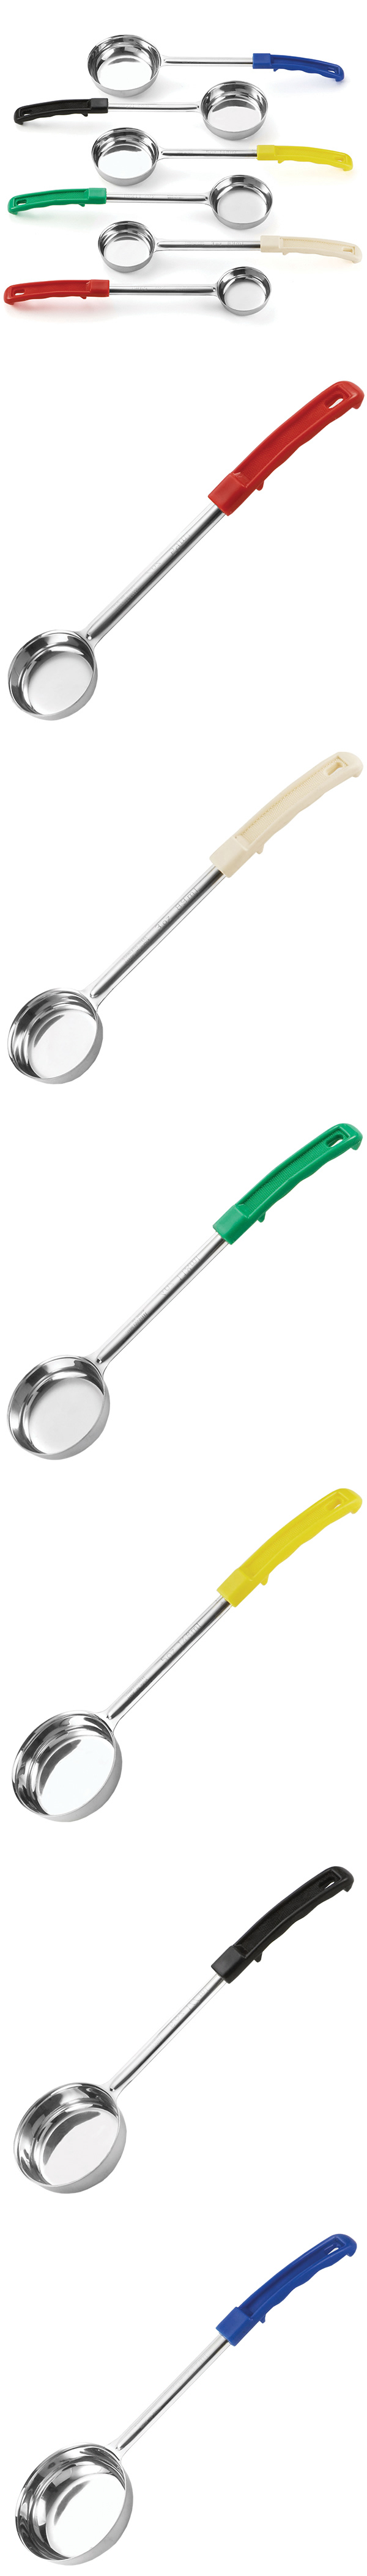 Stainless Steel measuring spoons